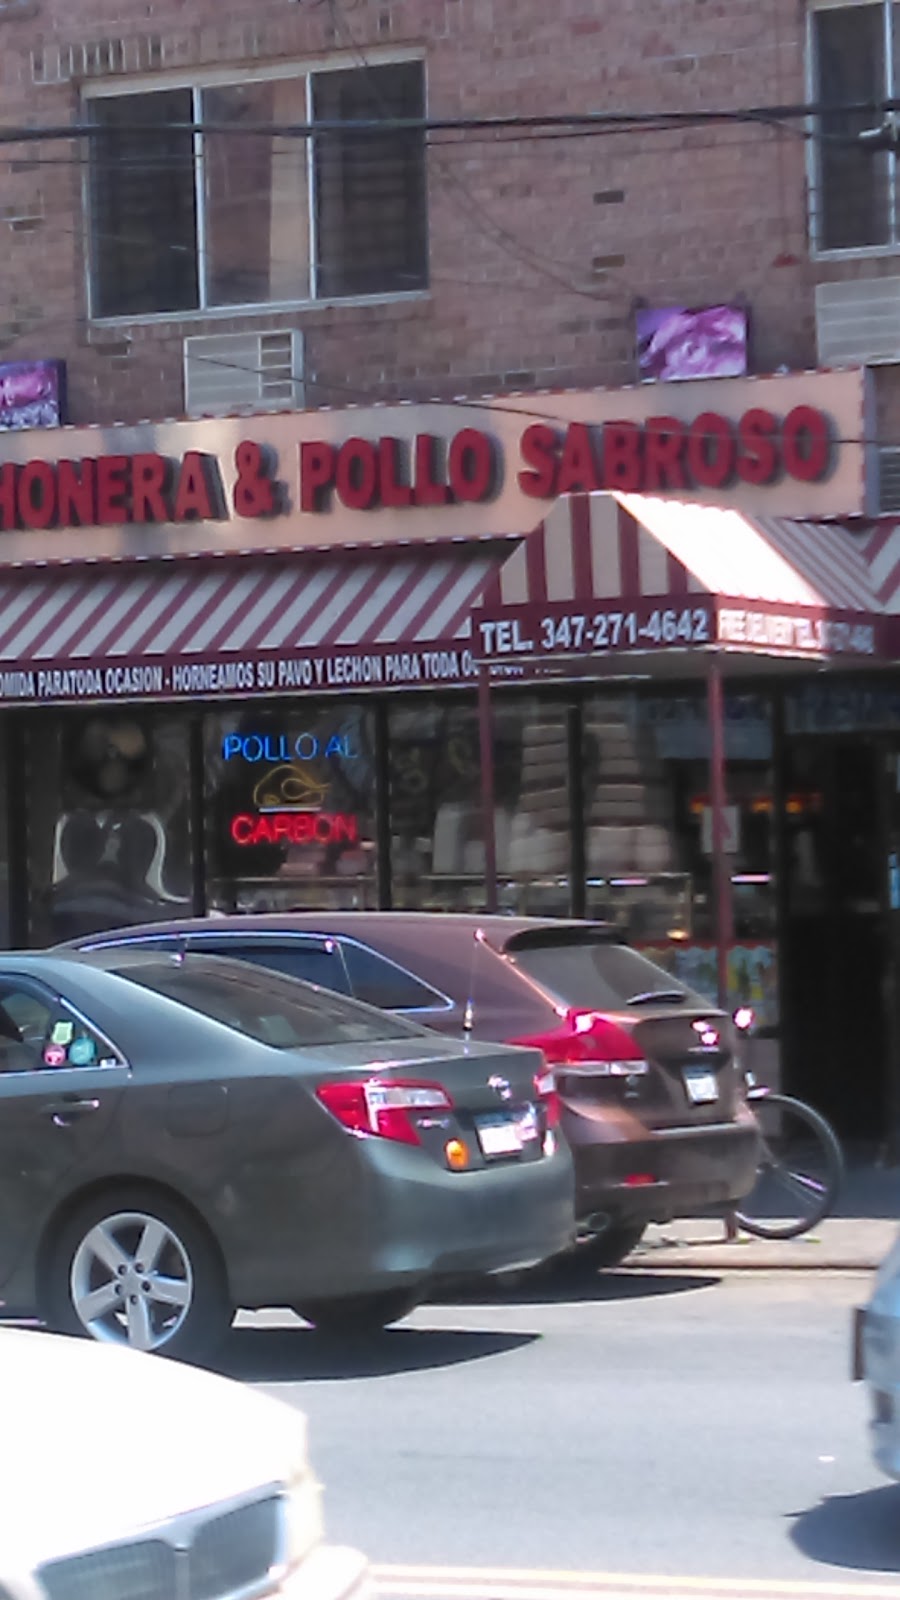 Photo of Lechonera & Pollo Sabroso in Bronx City, New York, United States - 1 Picture of Restaurant, Food, Point of interest, Establishment